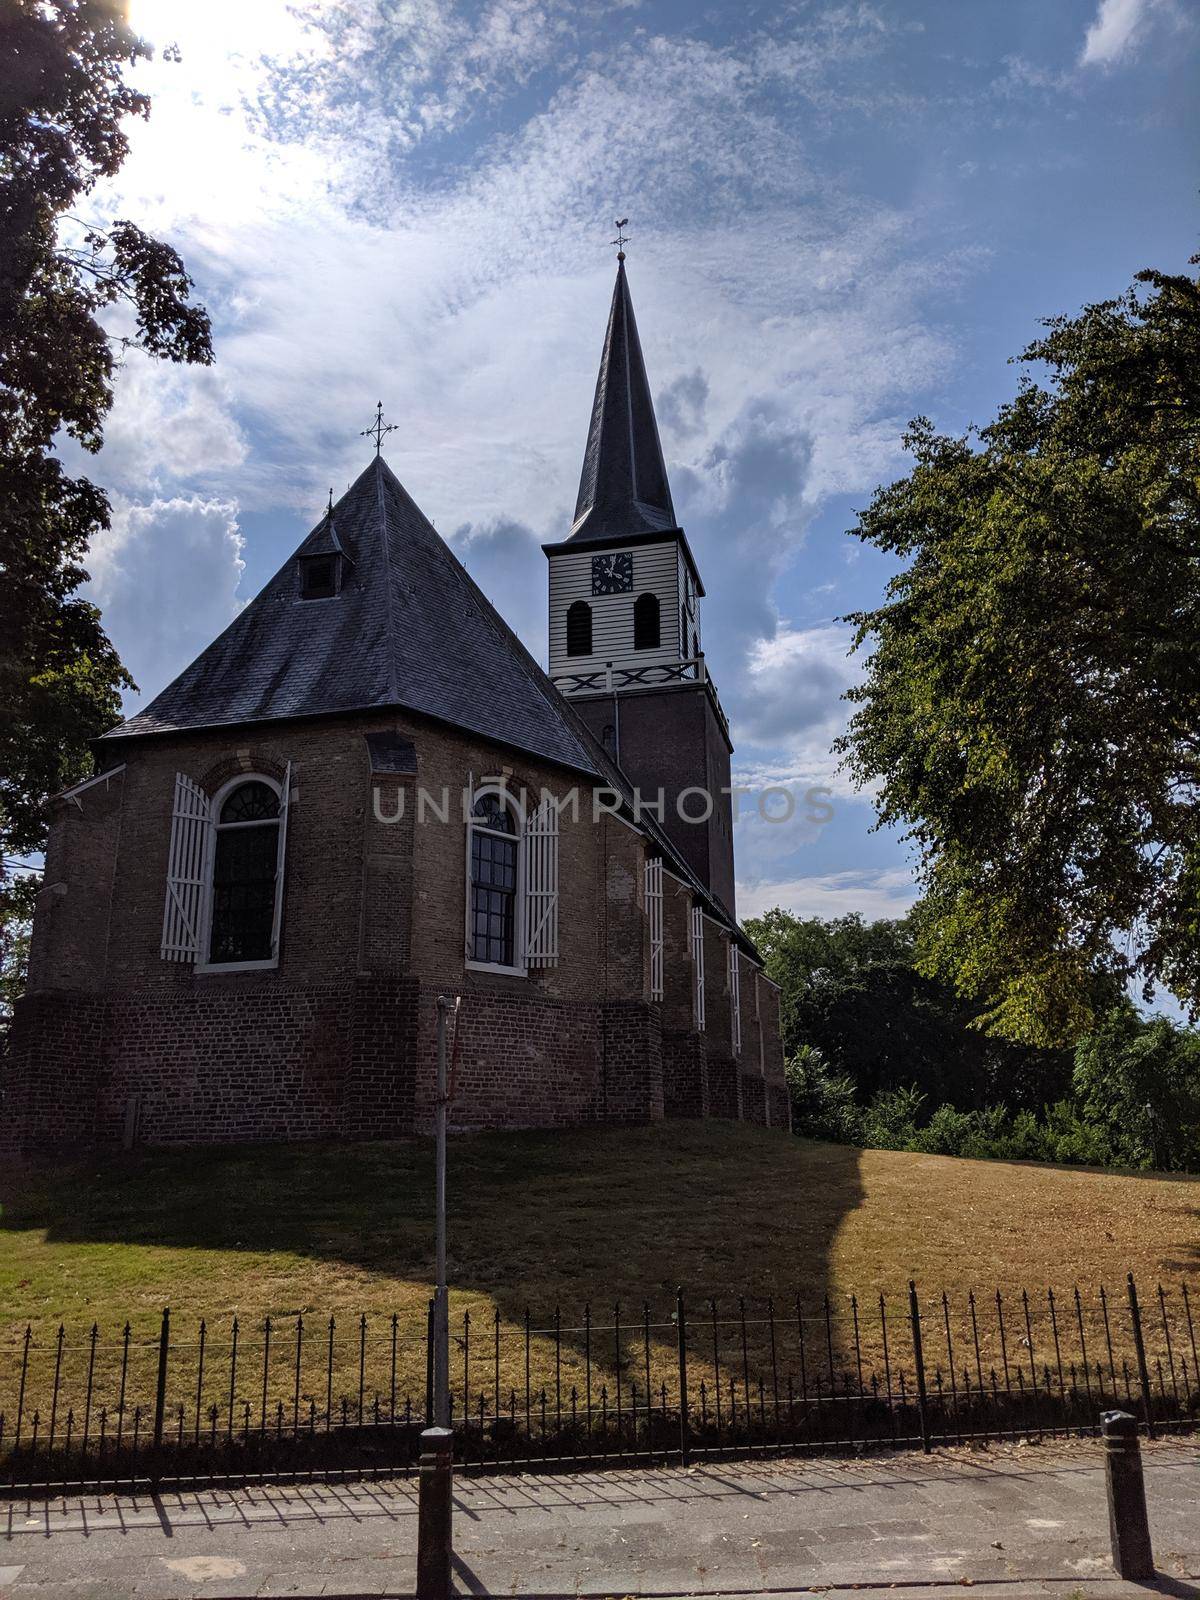 Church in Wolvega, Friesland The Netherlands